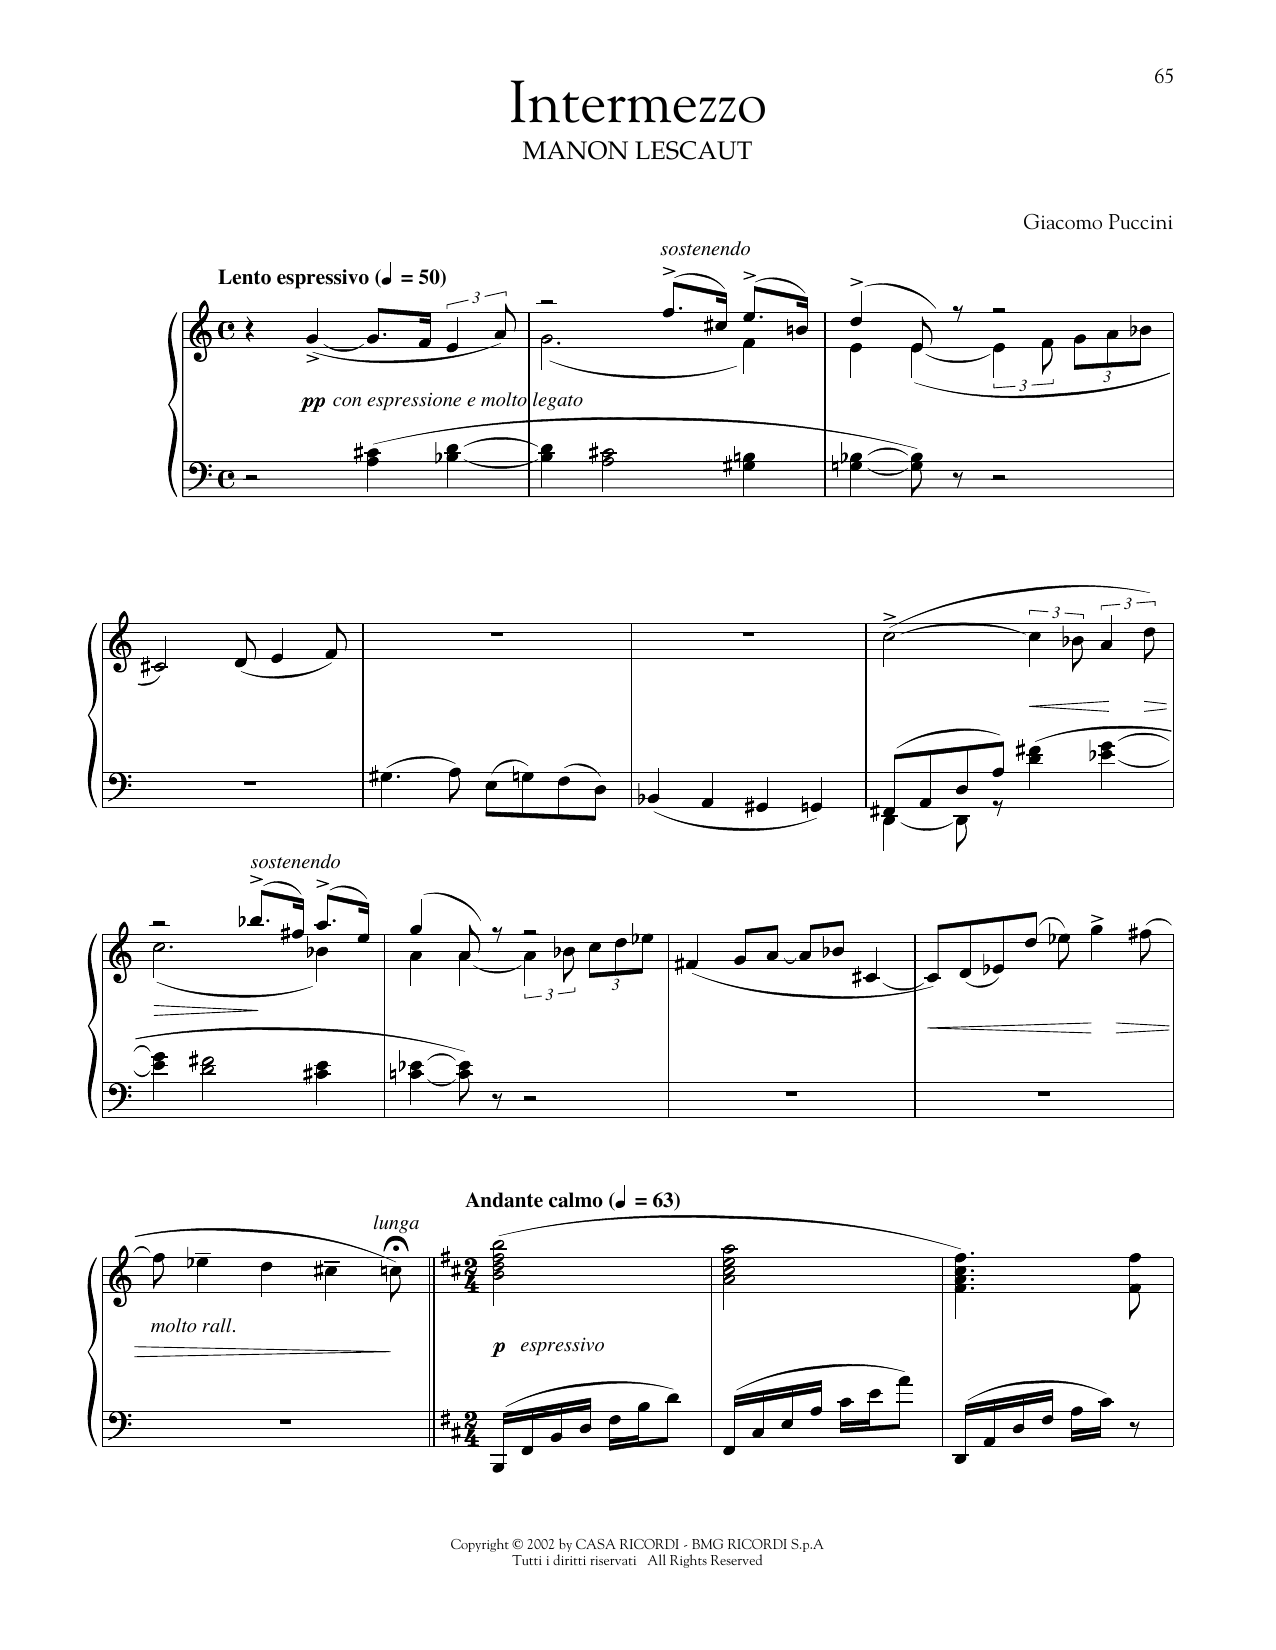 Giacomo Puccini Intermezzo sheet music notes printable PDF score